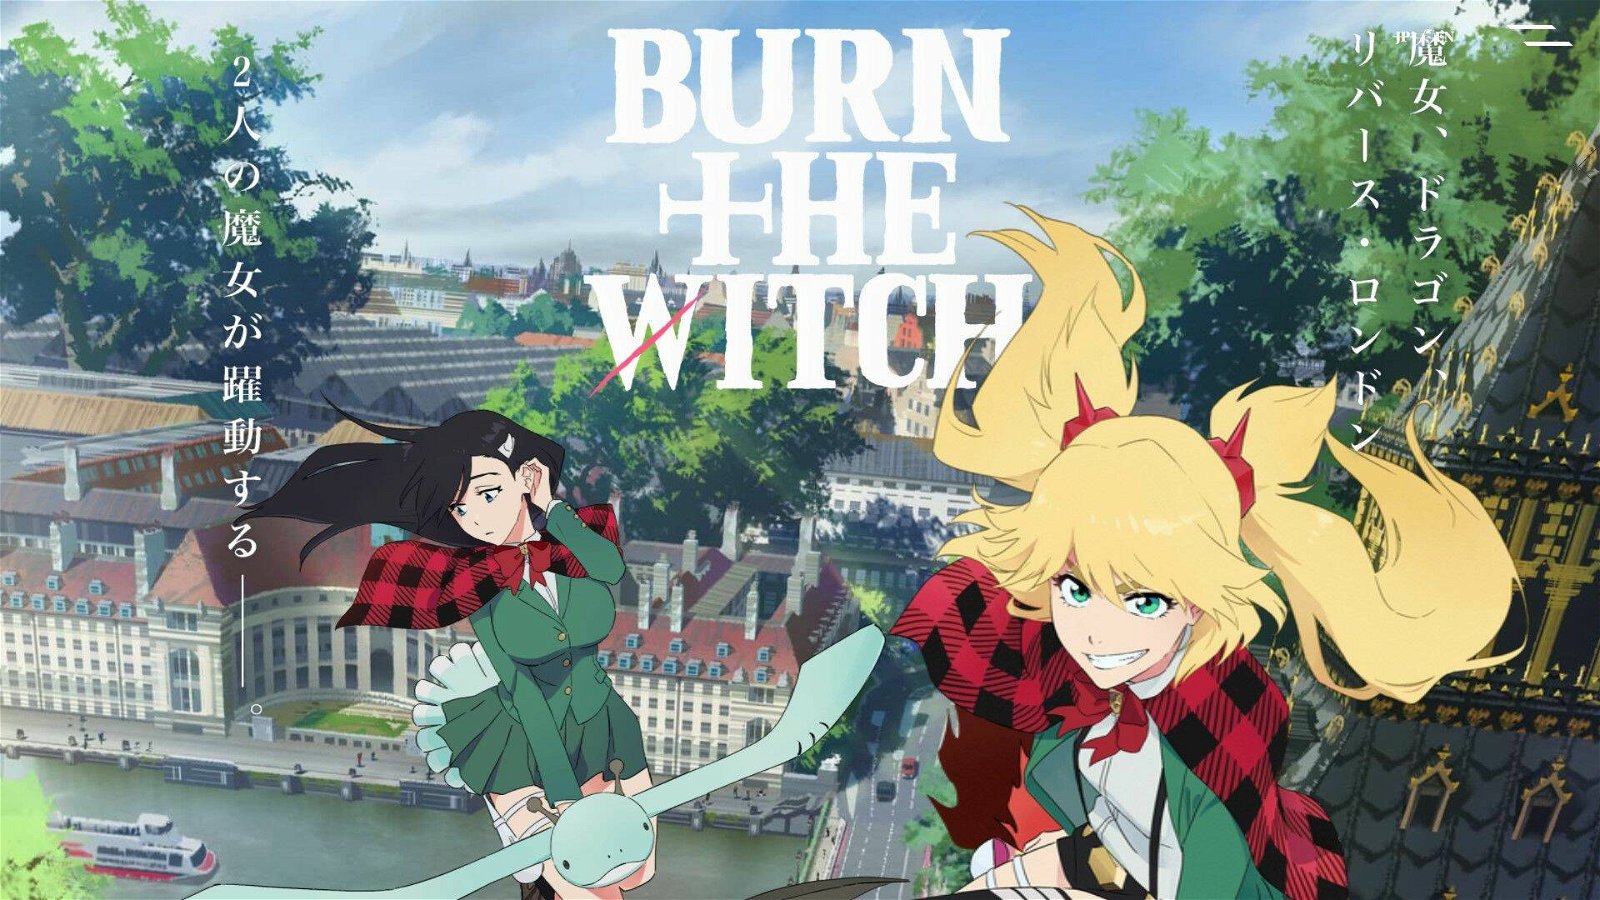 Immagine di Burn The Witch: Planet Manga porta in Italia il nuovo manga di Tite Kubo